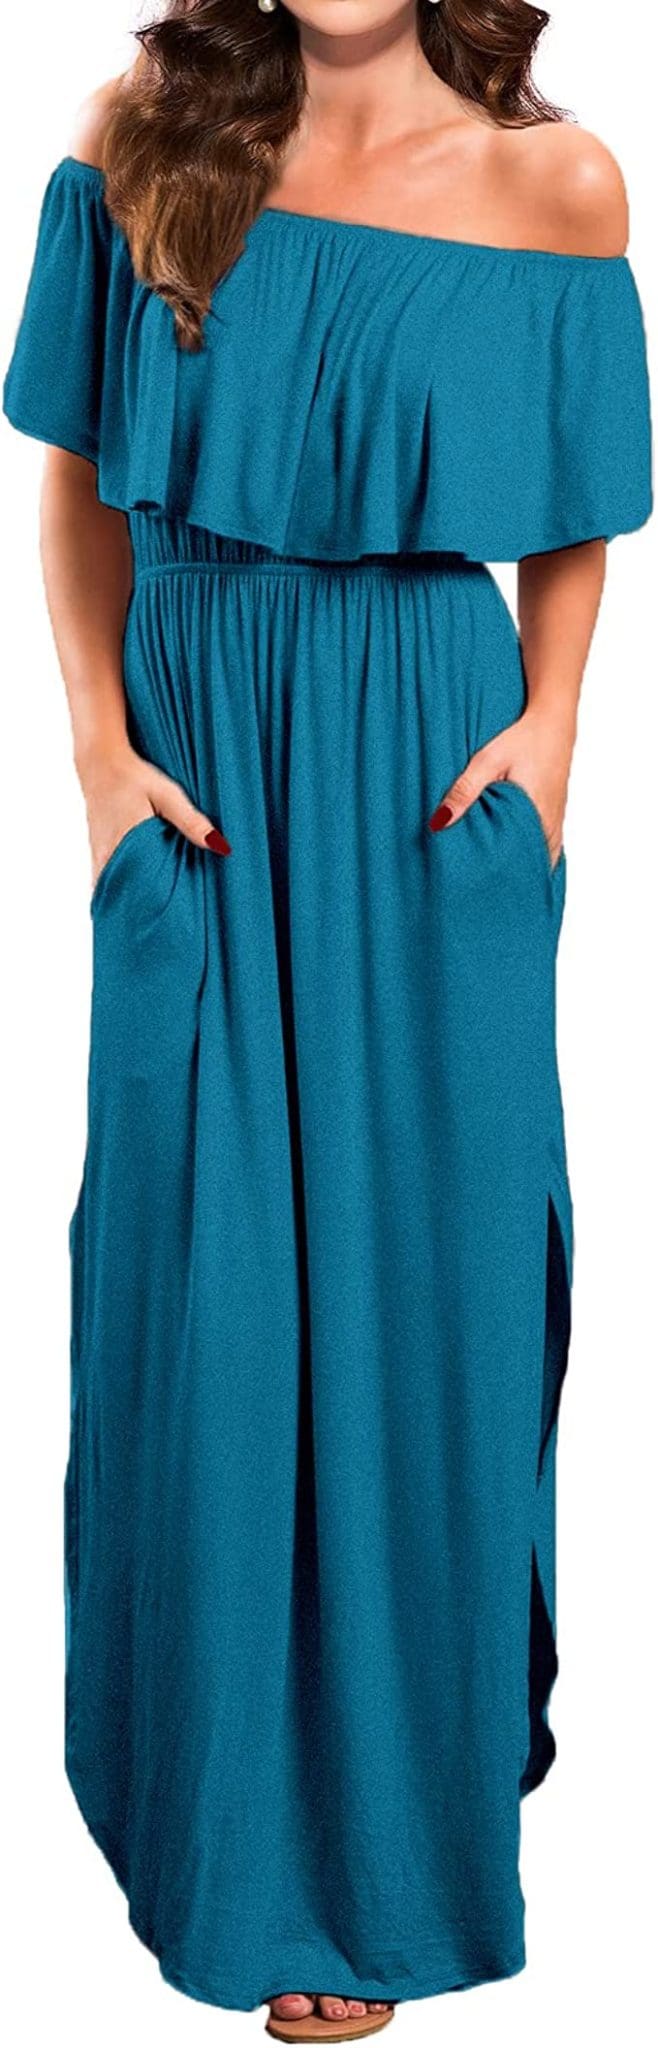 VERABENDI Women's Off Shoulder Summer Casual Long Ruffle Beach Maxi Dress with Pockets